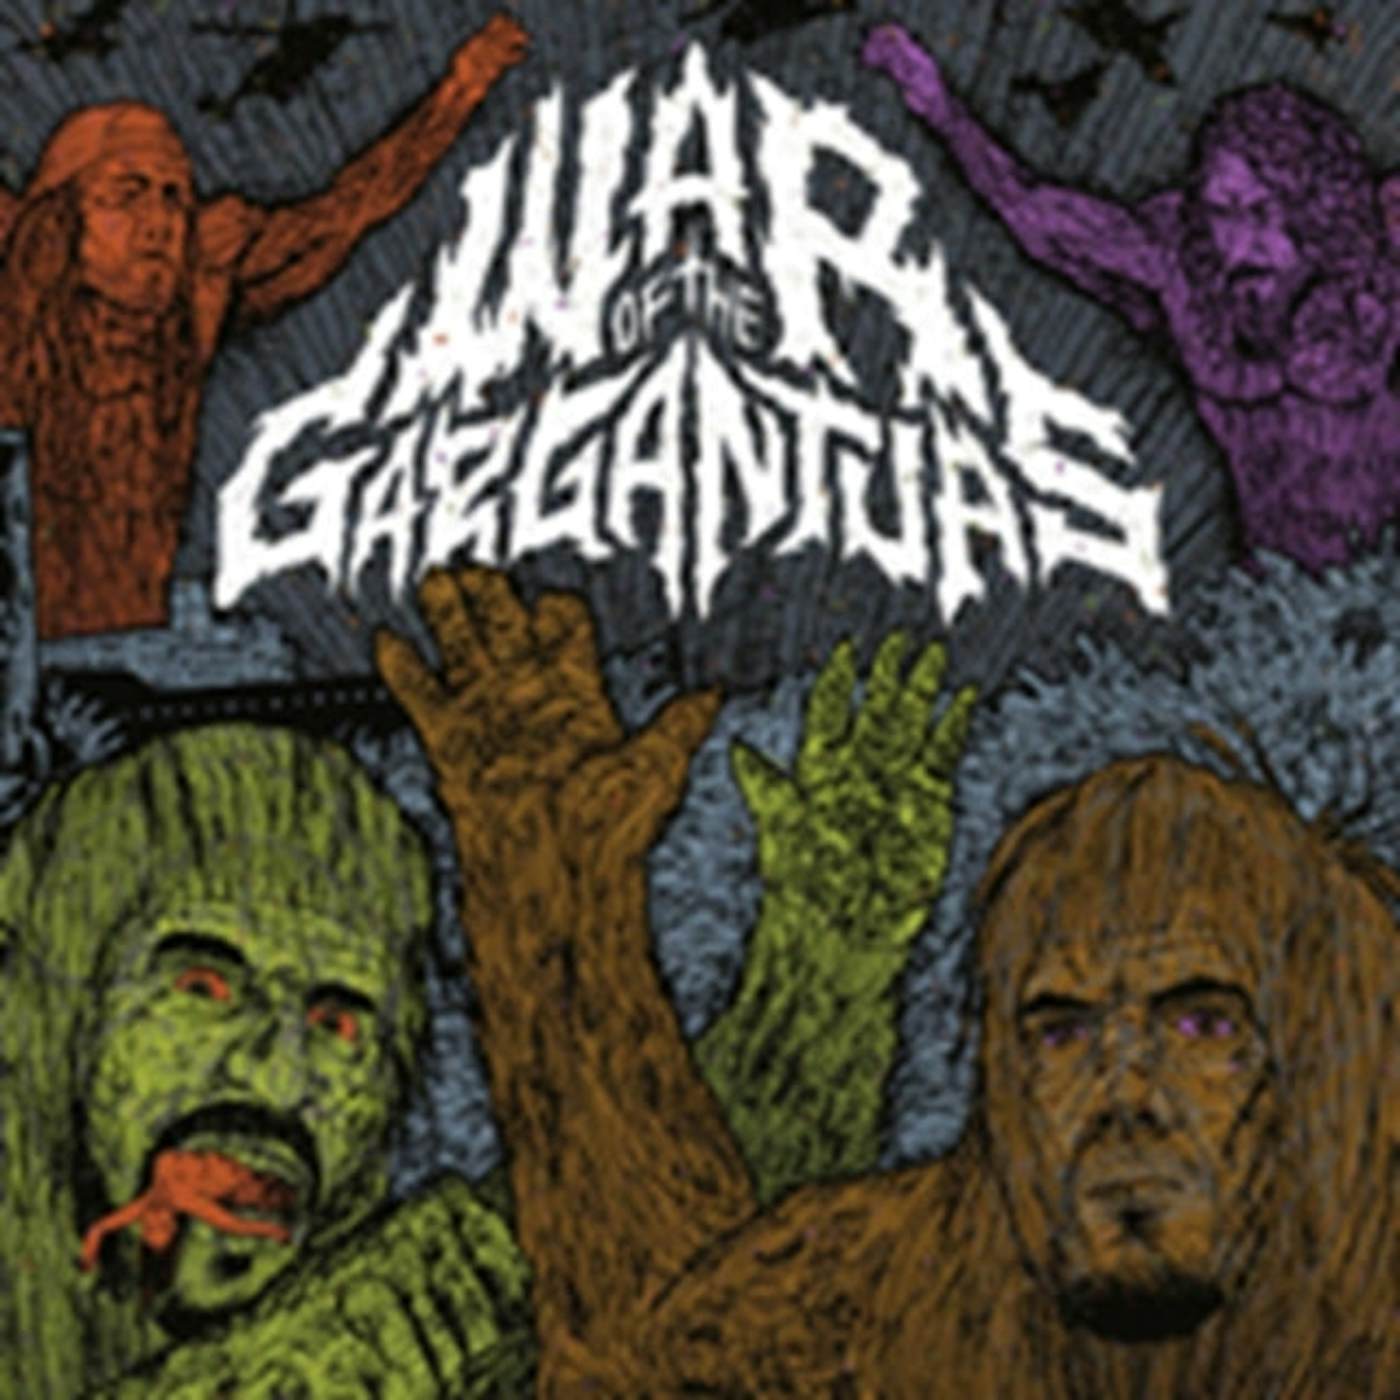 Philip H. Anselmo & Warbeast CD - War Of The Gargantuas